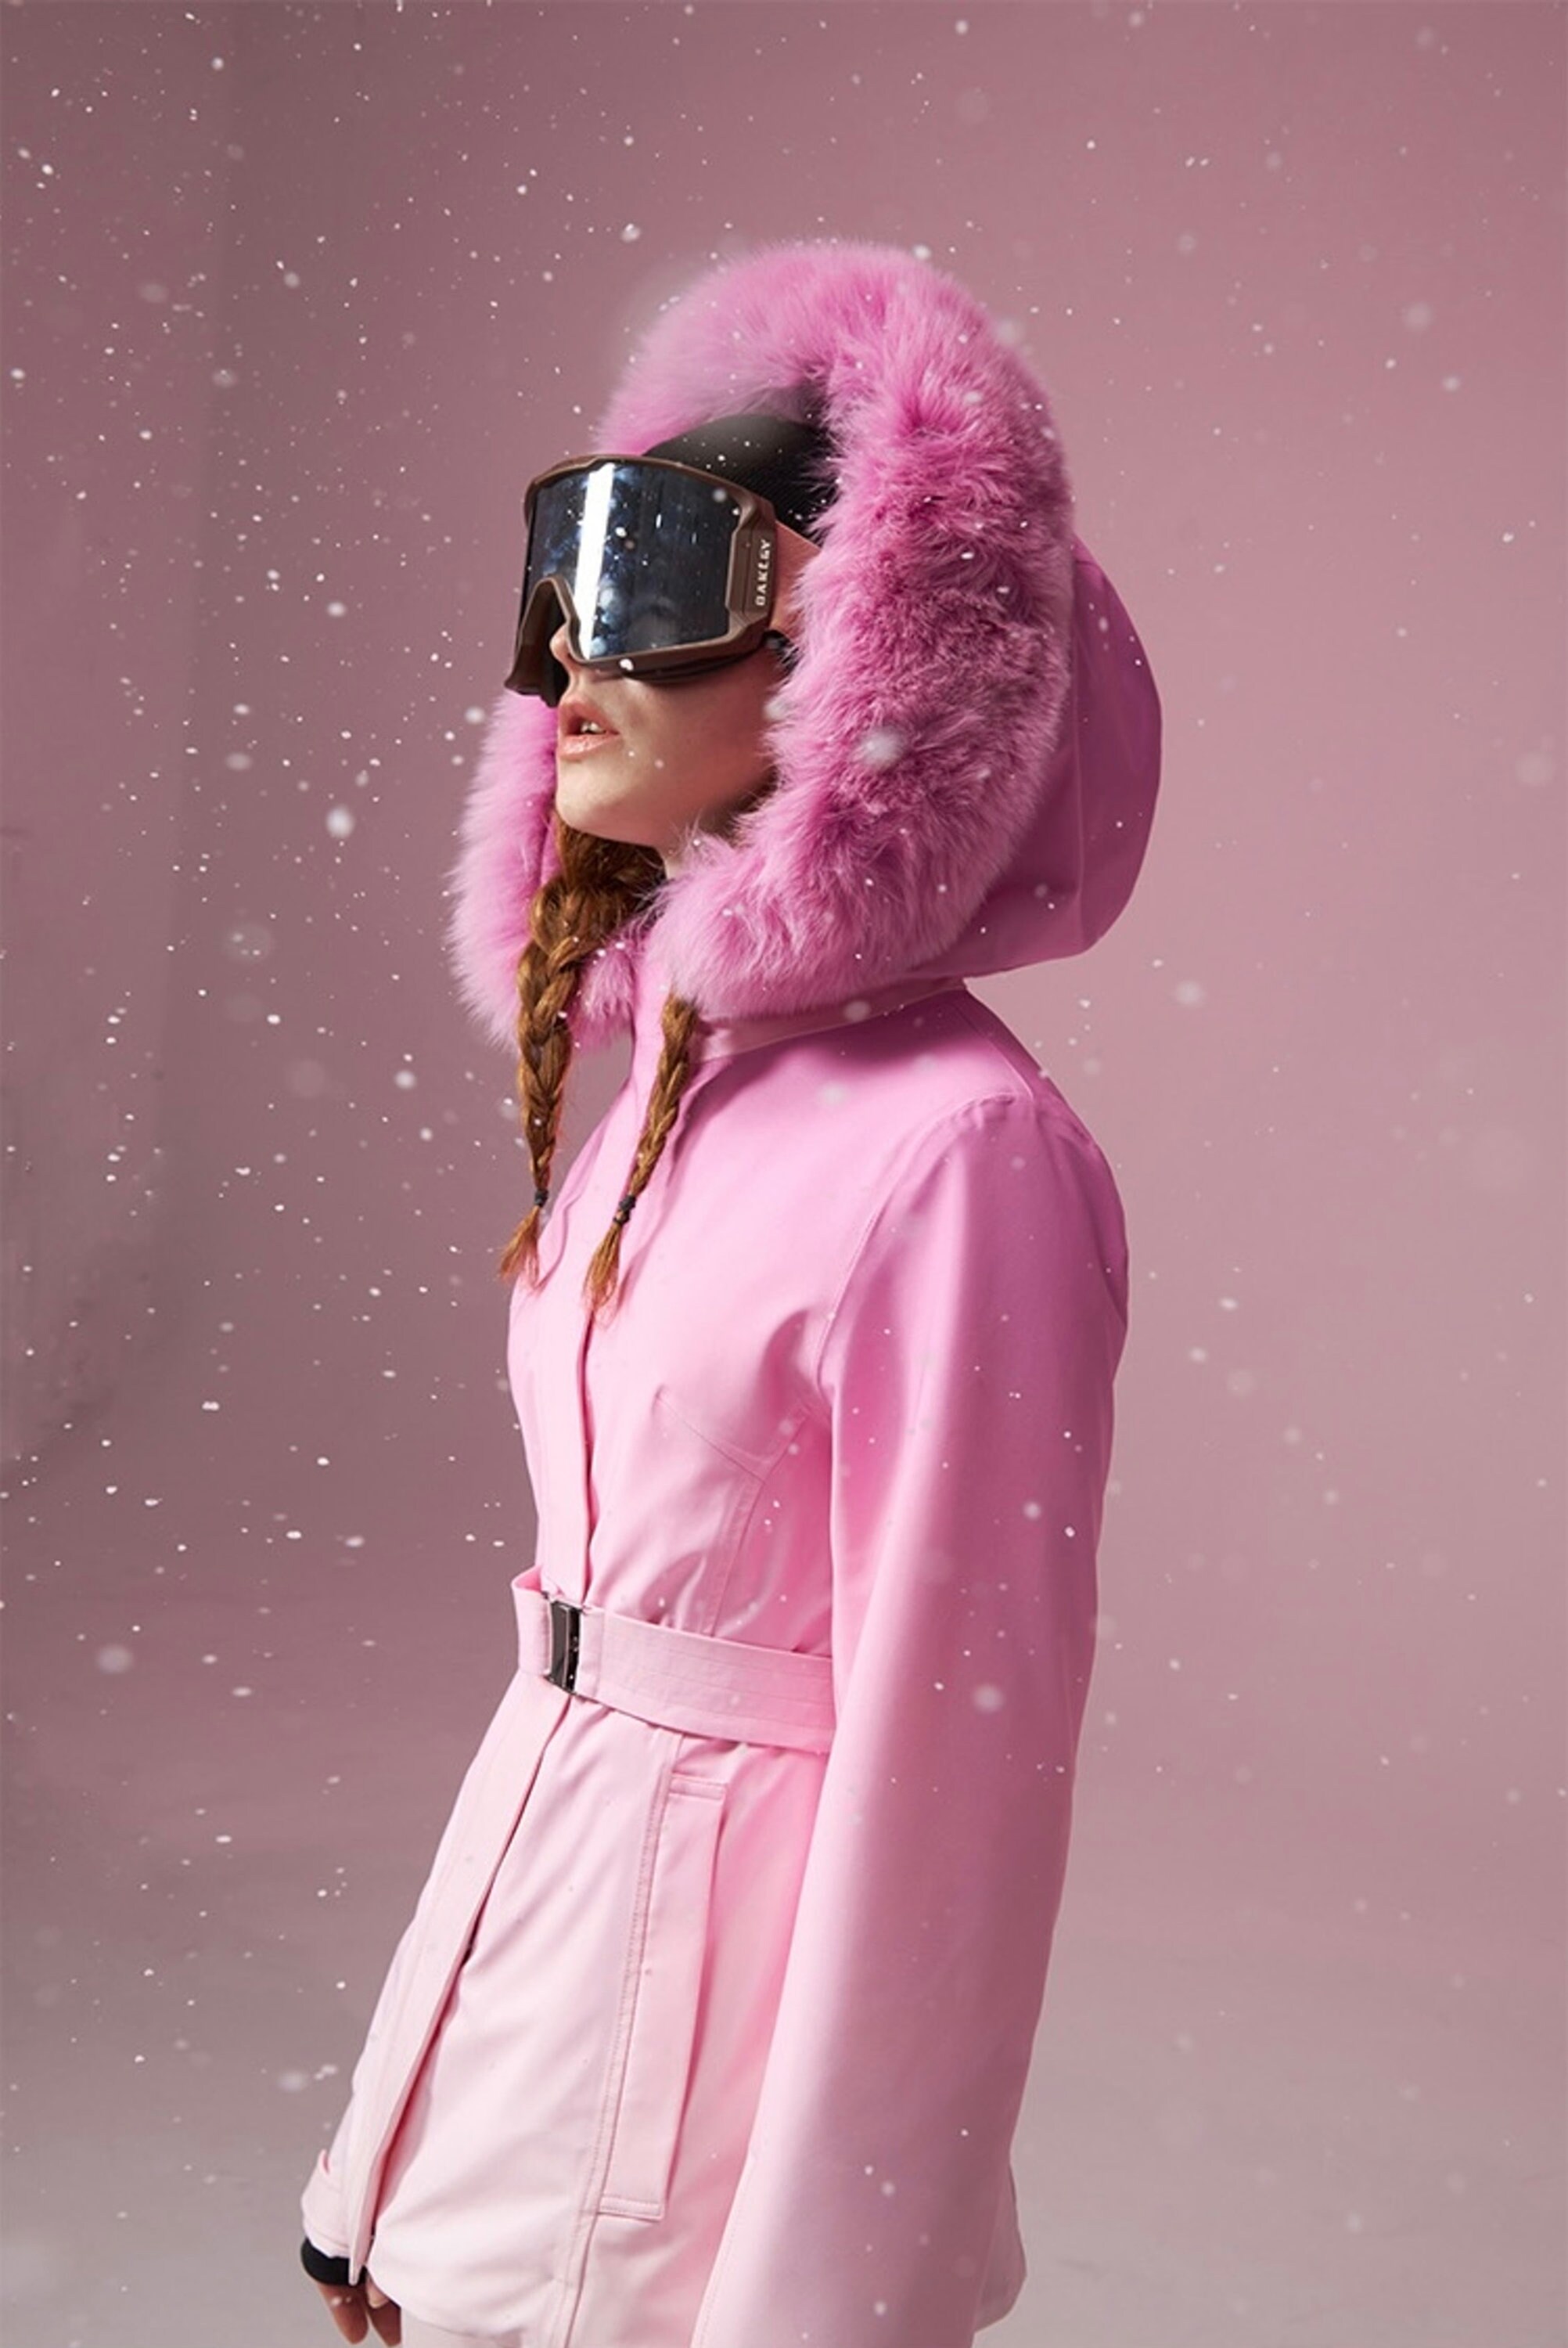 Buy Pink Ski Suit Online In India -  India